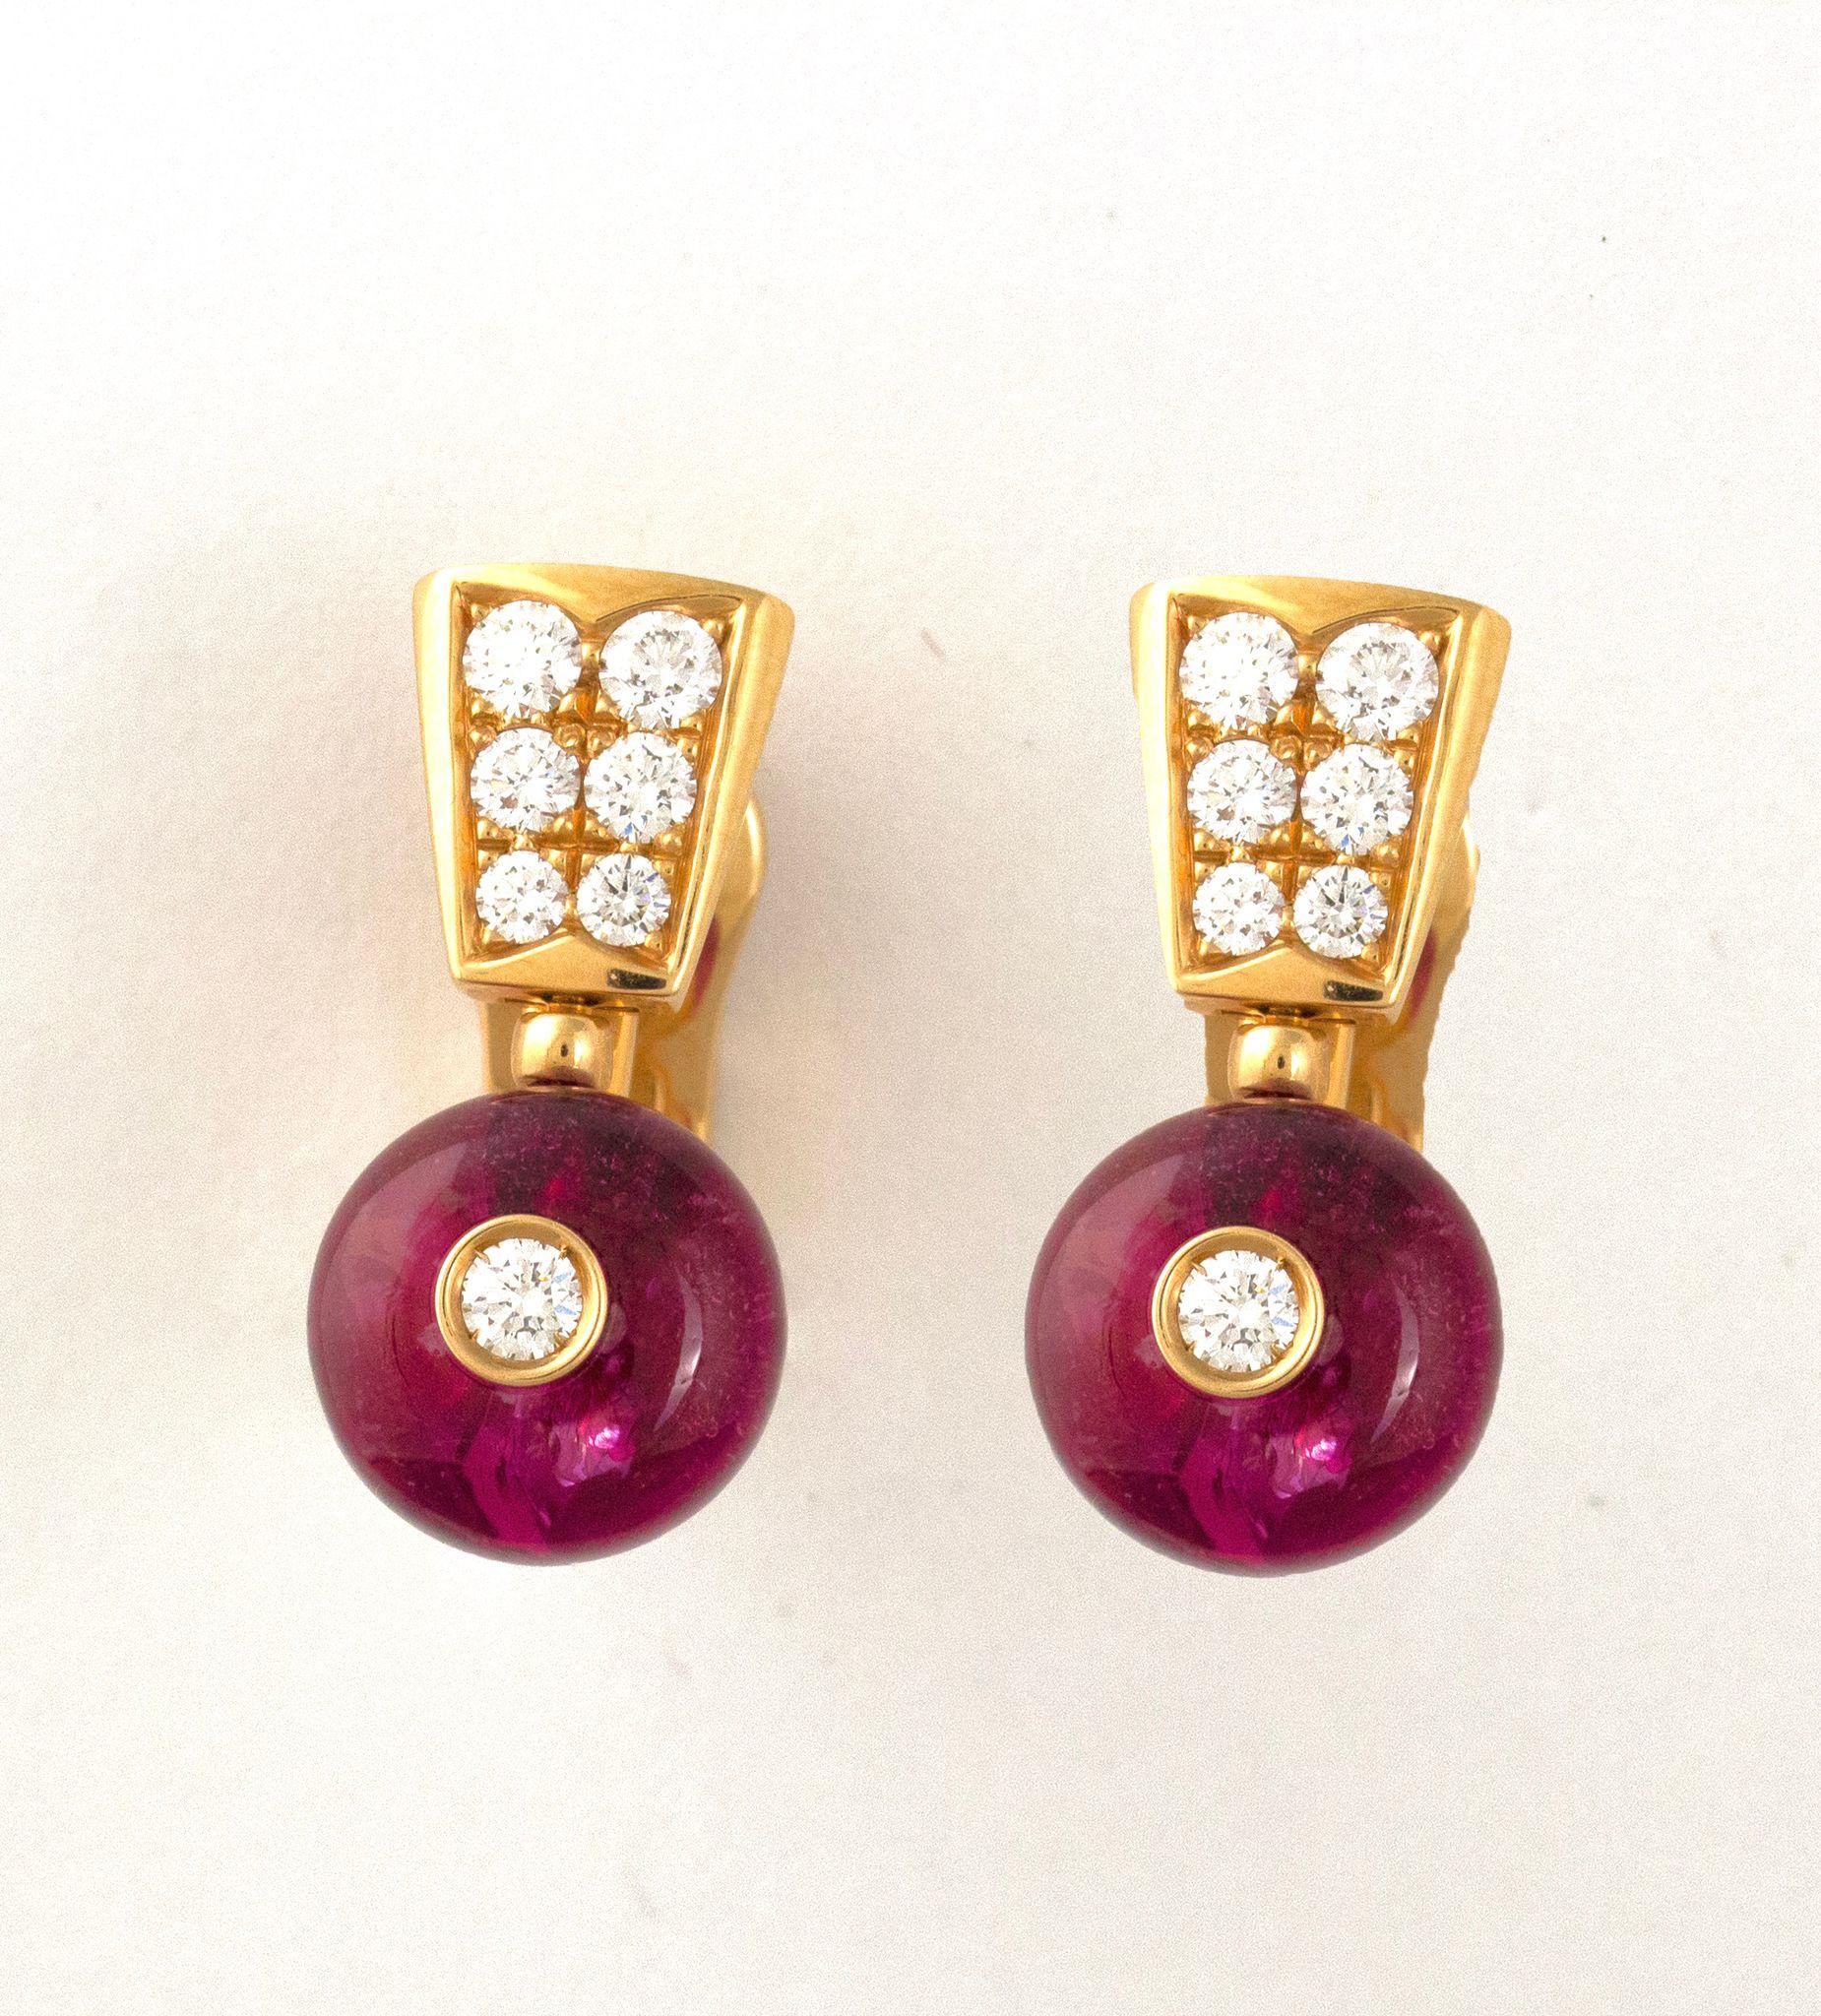 Brilliant Cut Bulgari 18K Rose Gold Diamond & Rubellite Earrings